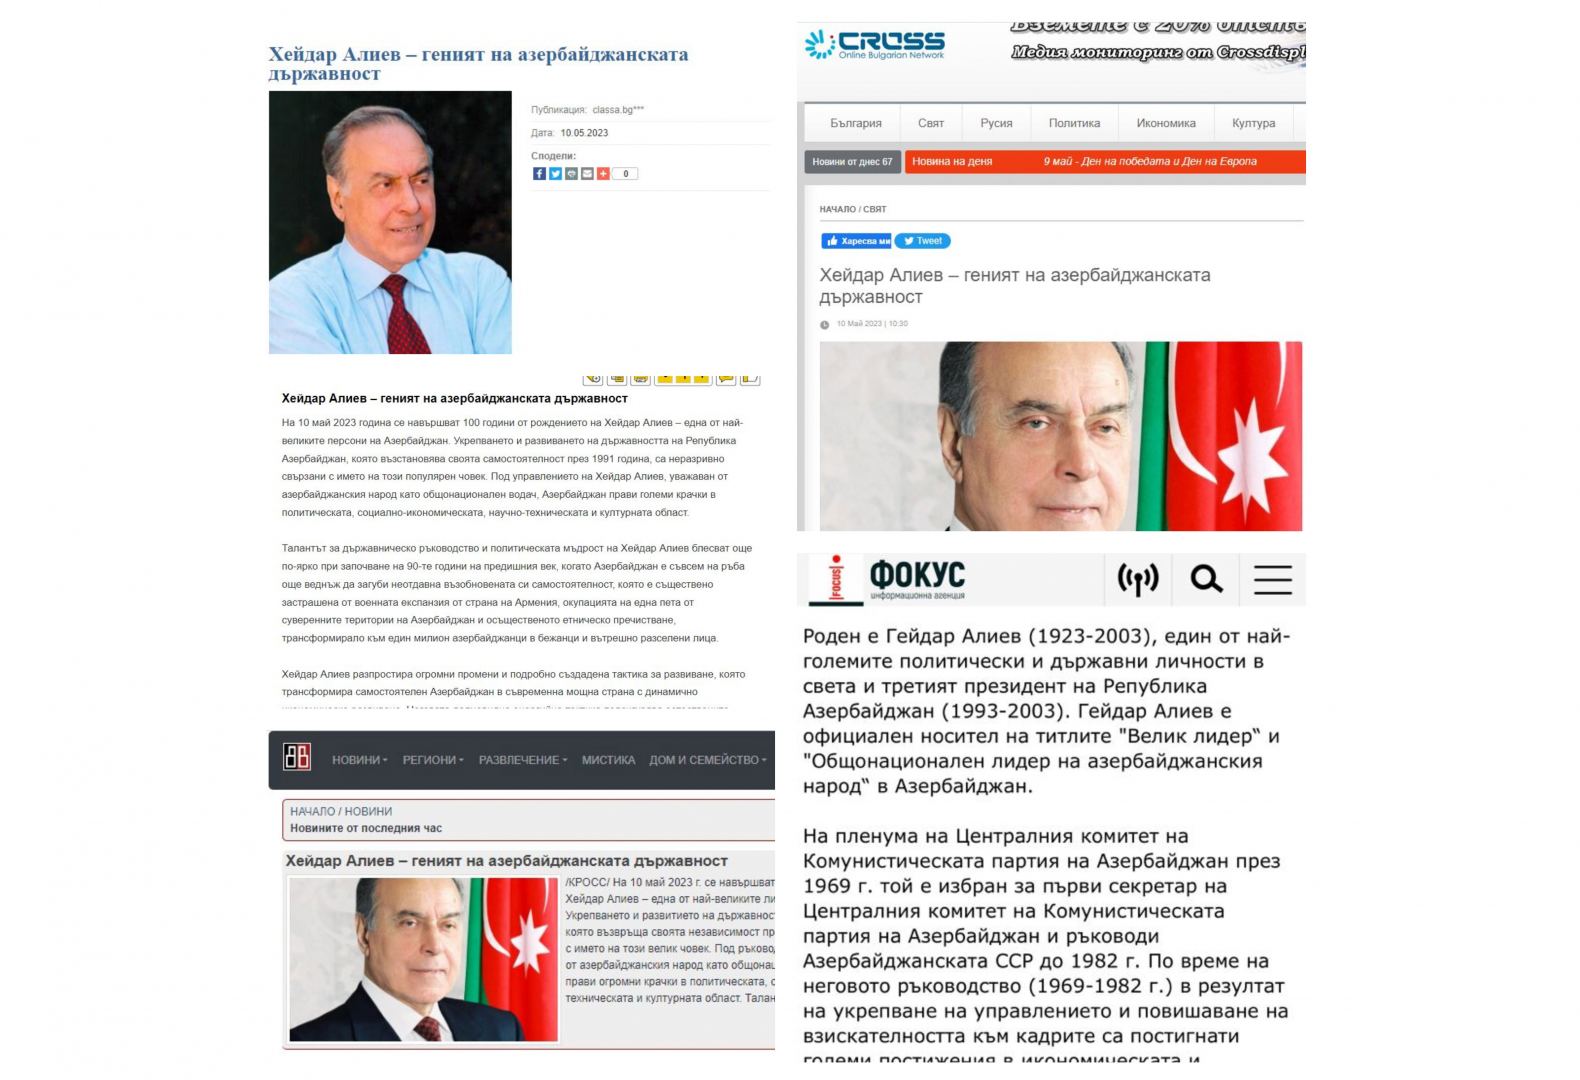 100th anniversary of Azerbaijan's national leader Heydar Aliyev widely covered by Bulgarian press